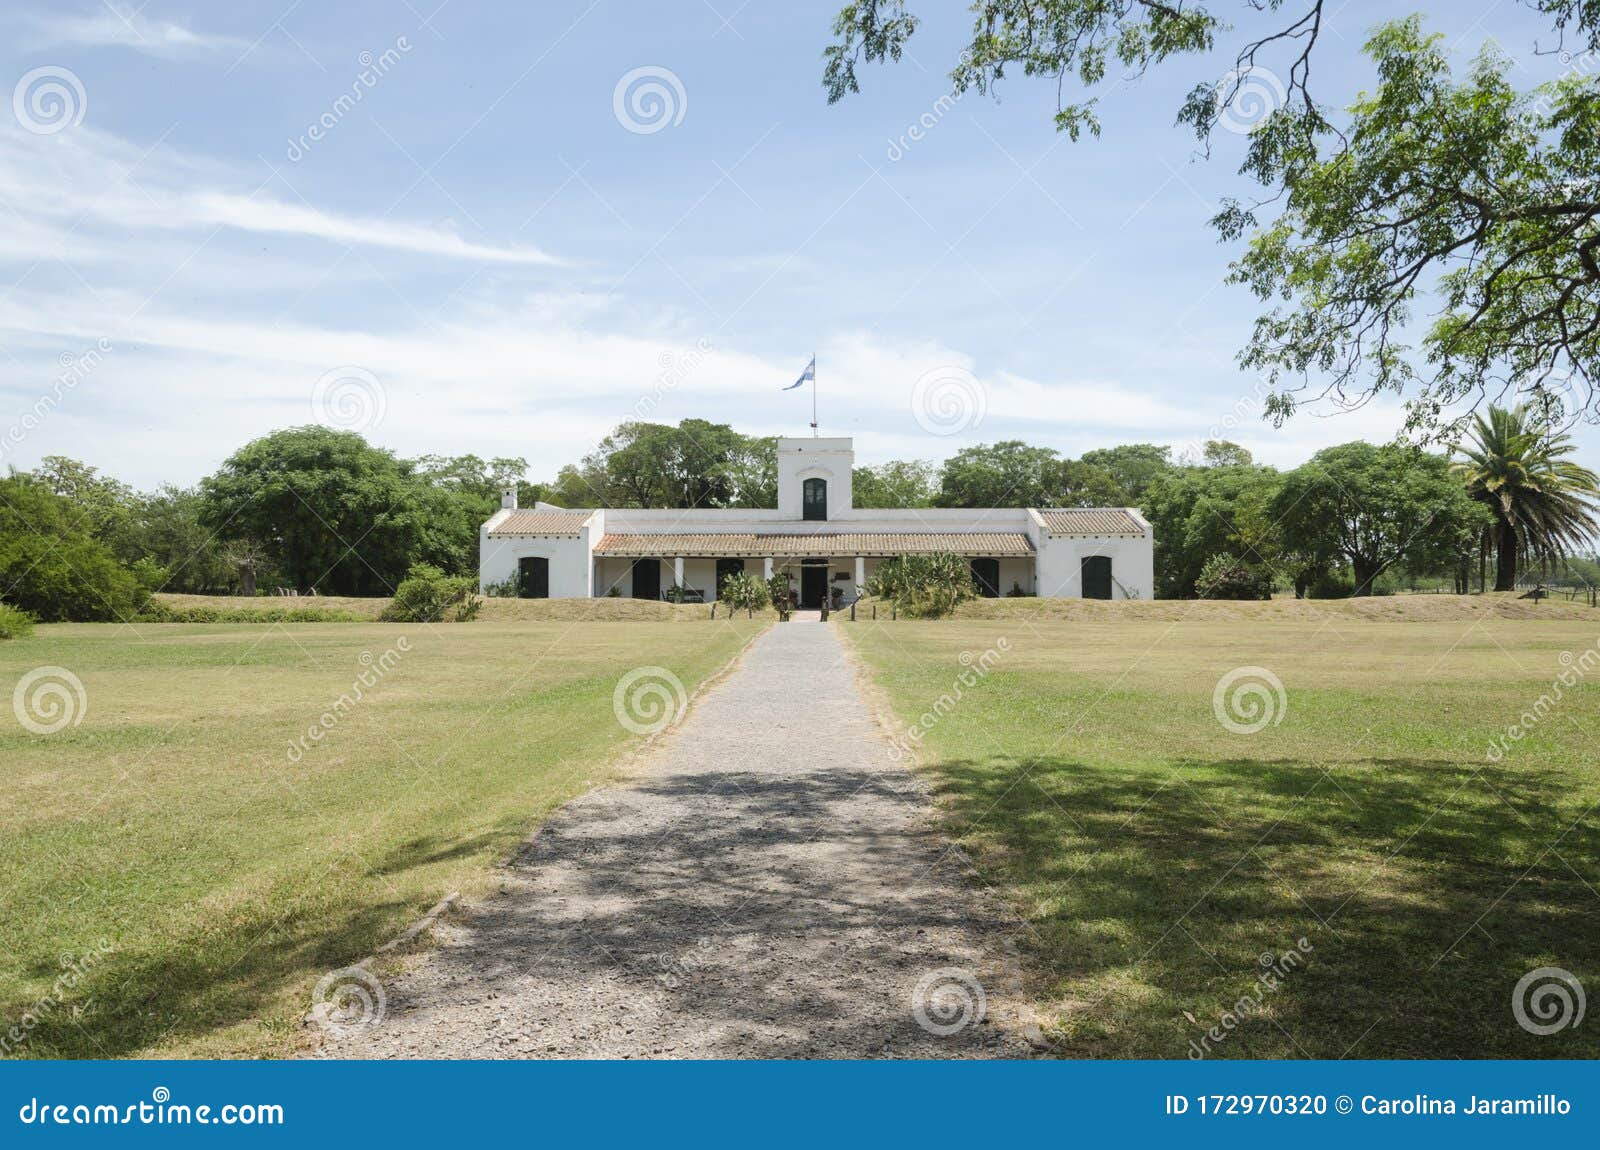 creole park and gauchesco museum ricardo guiraldes, san antonio de areco